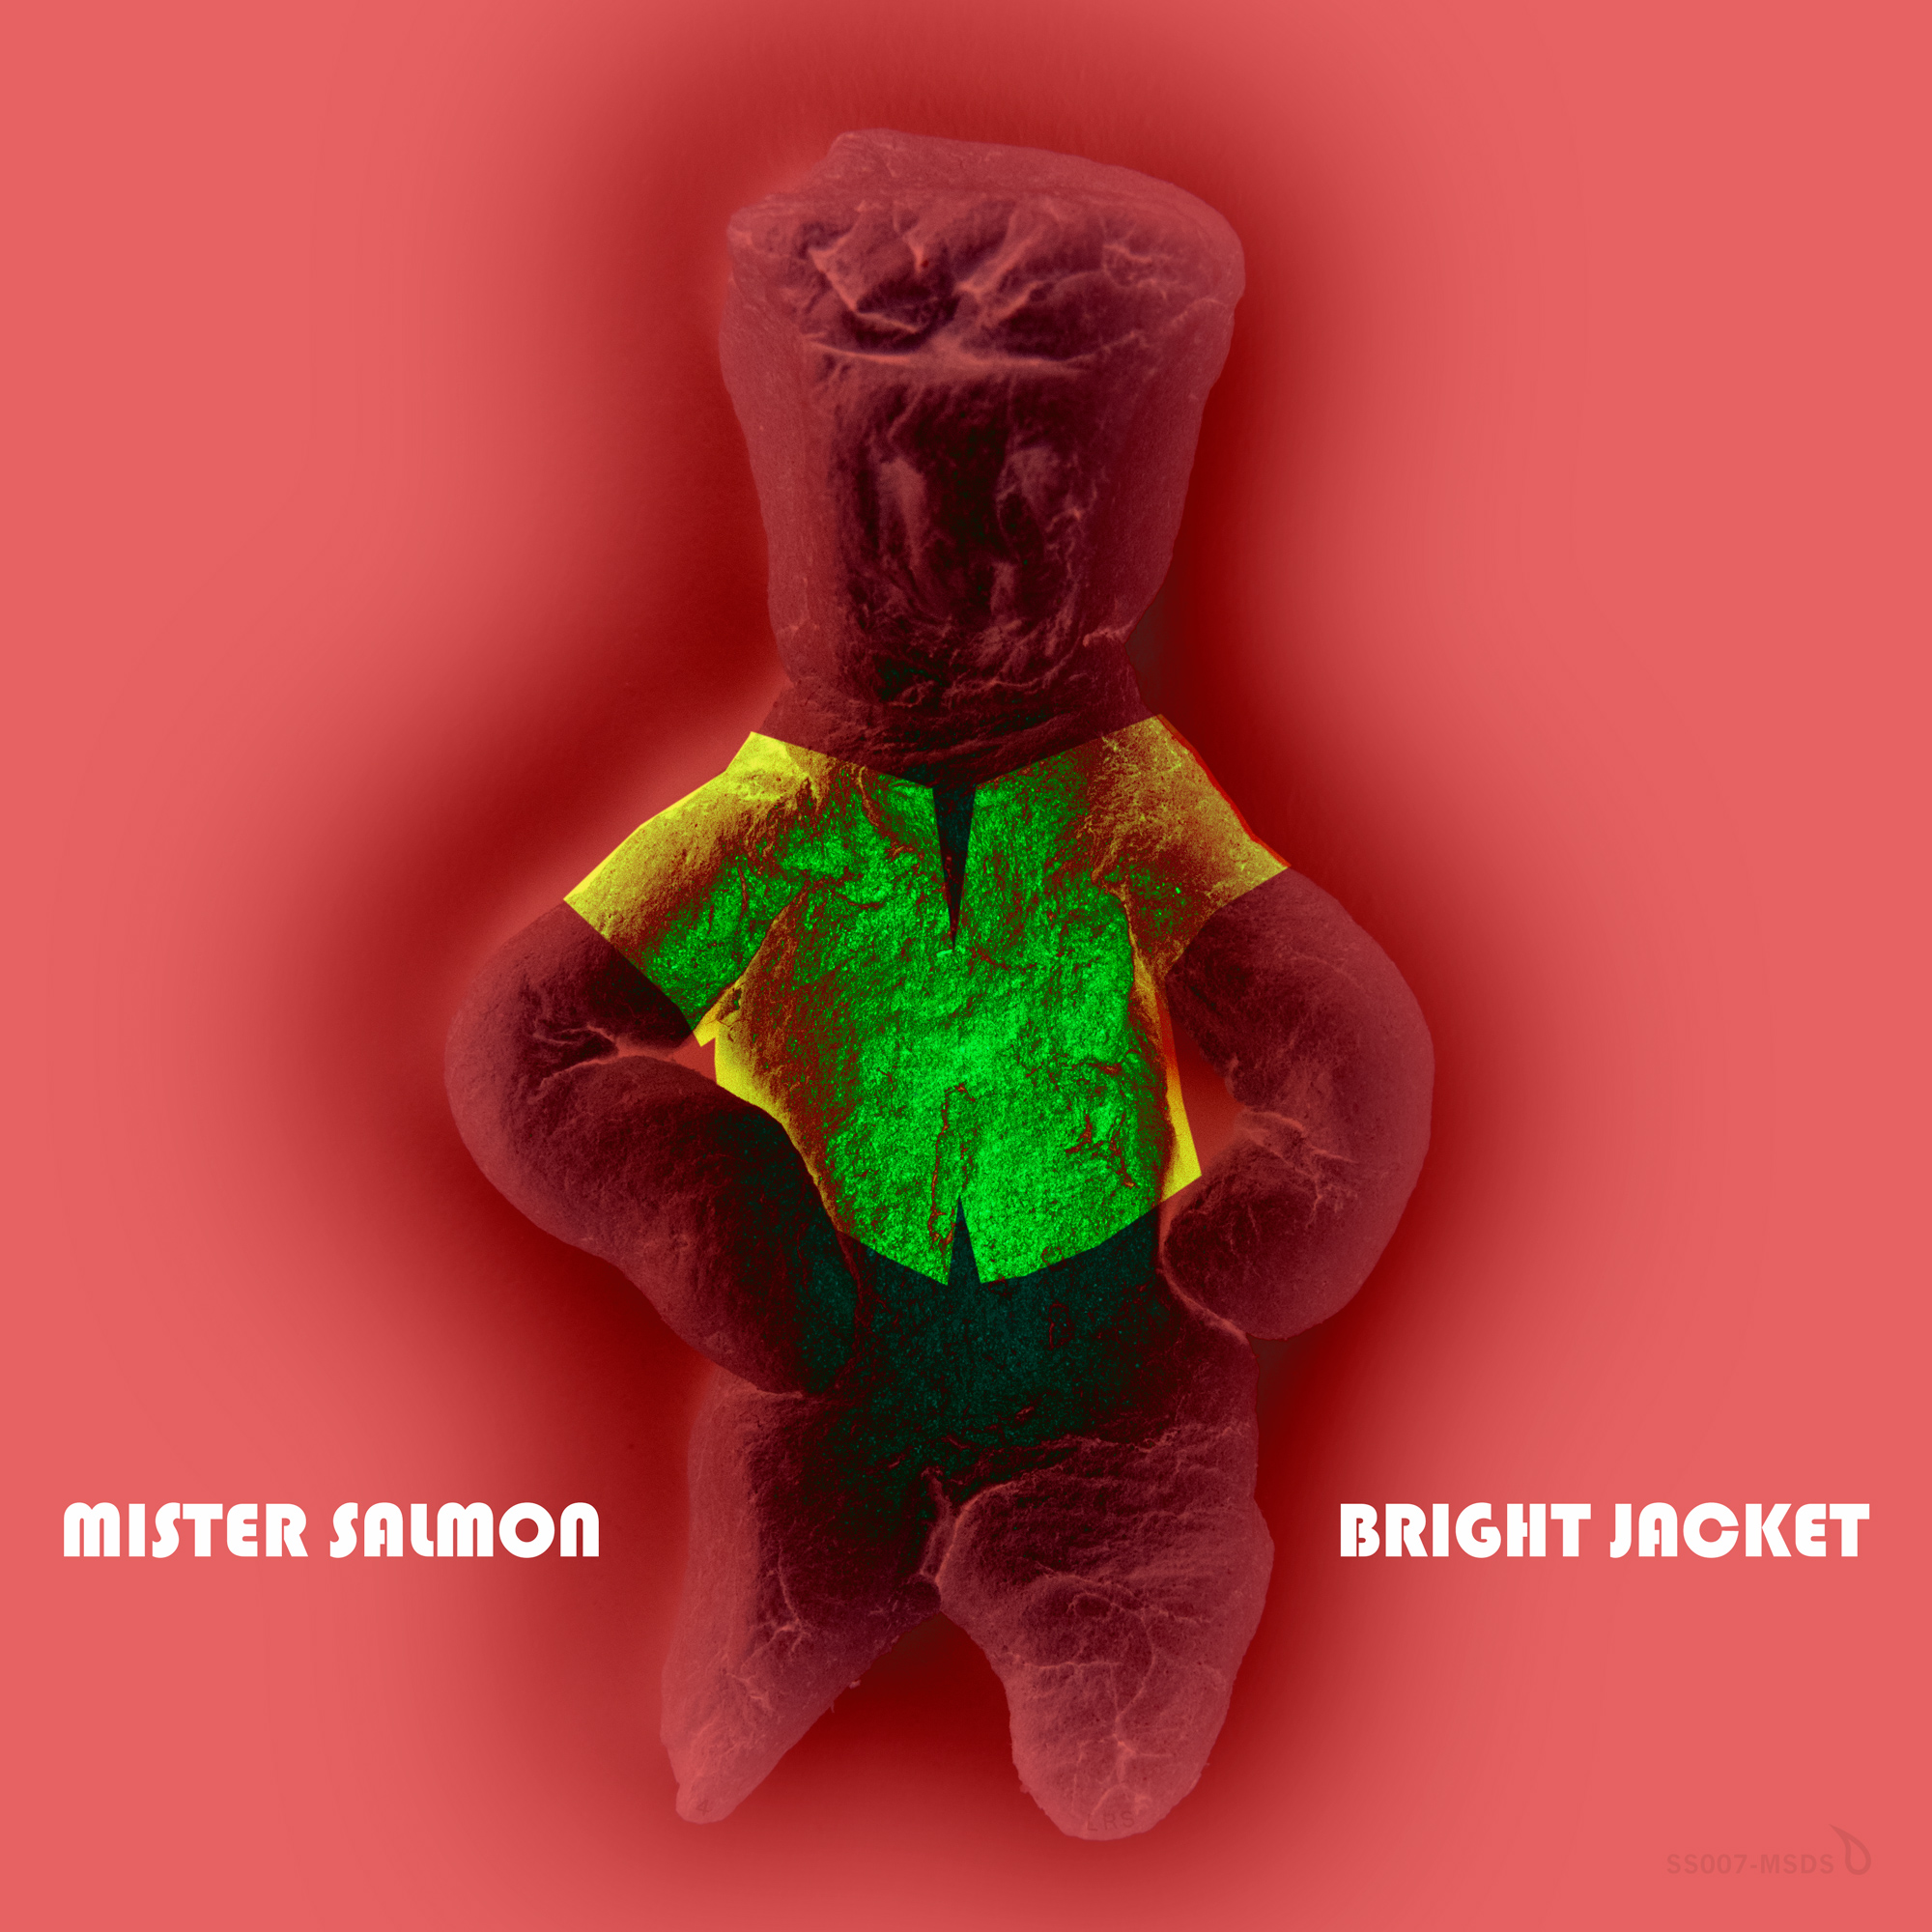 Mister Salmon - Bright Jacket. Digital single cover art 2022.